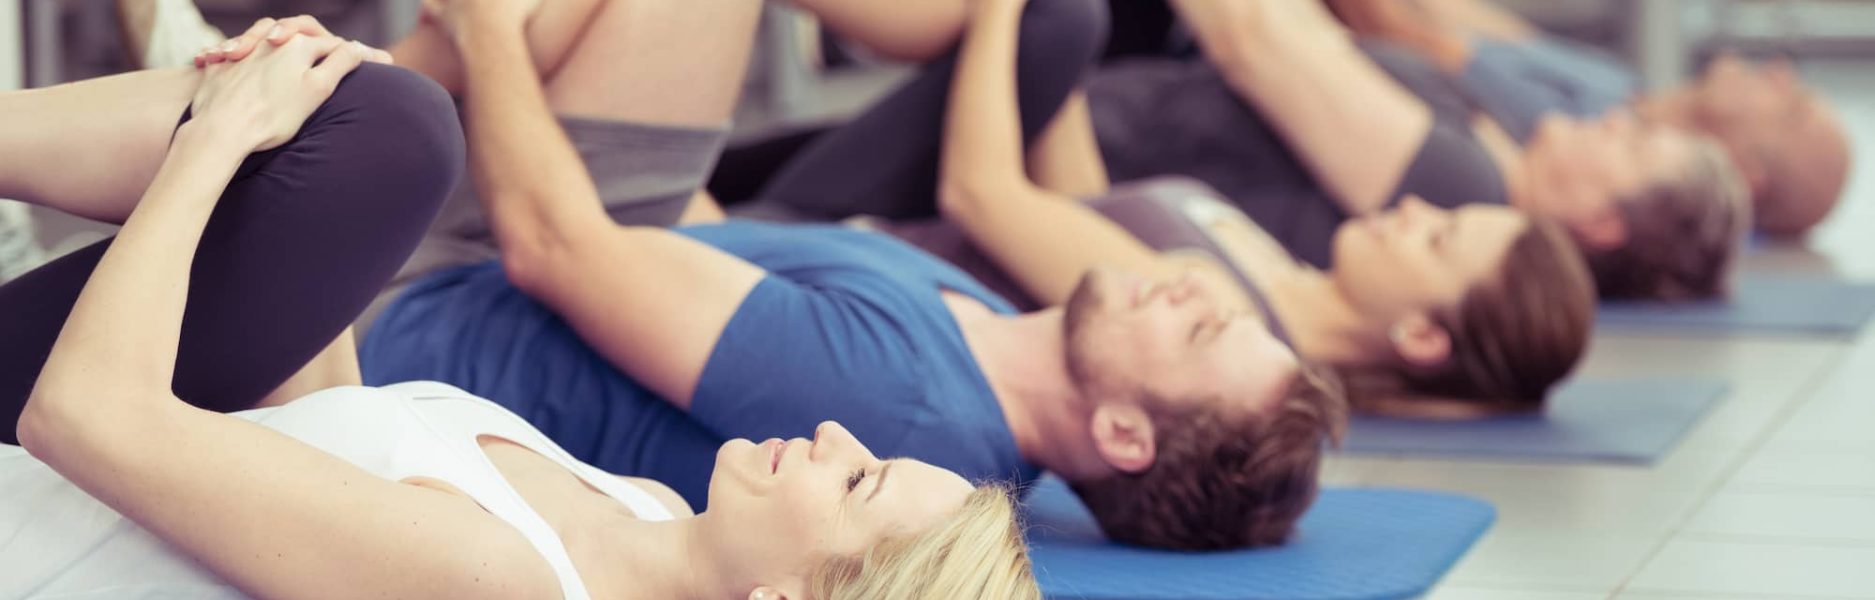 South East Chiropractic: peopel doign rehabilitation exercises on yoga mats